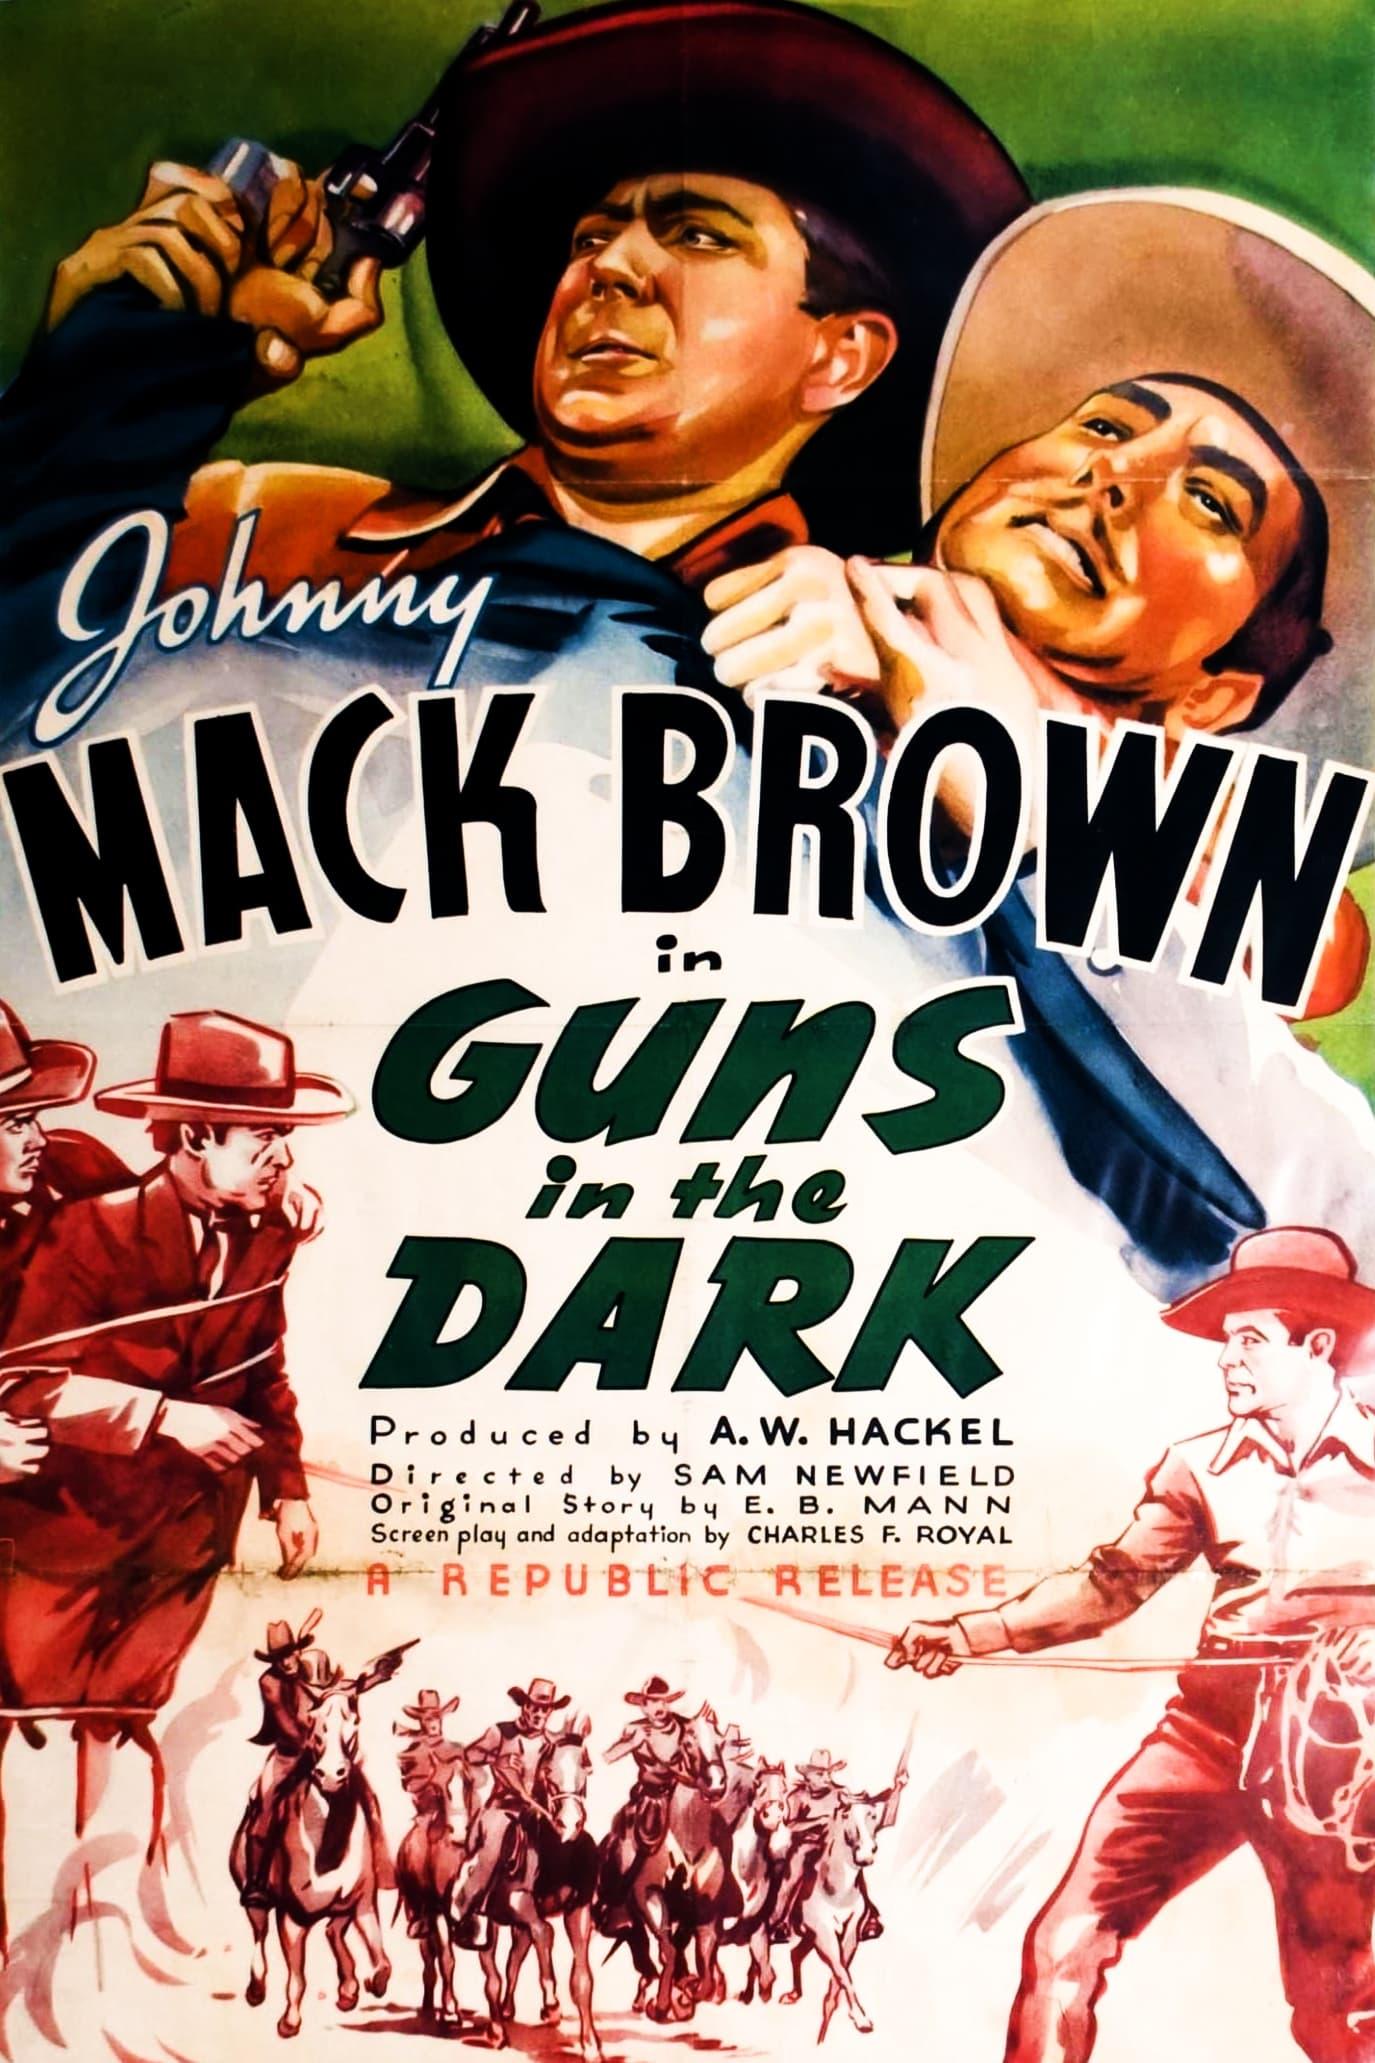 Guns in the Dark poster